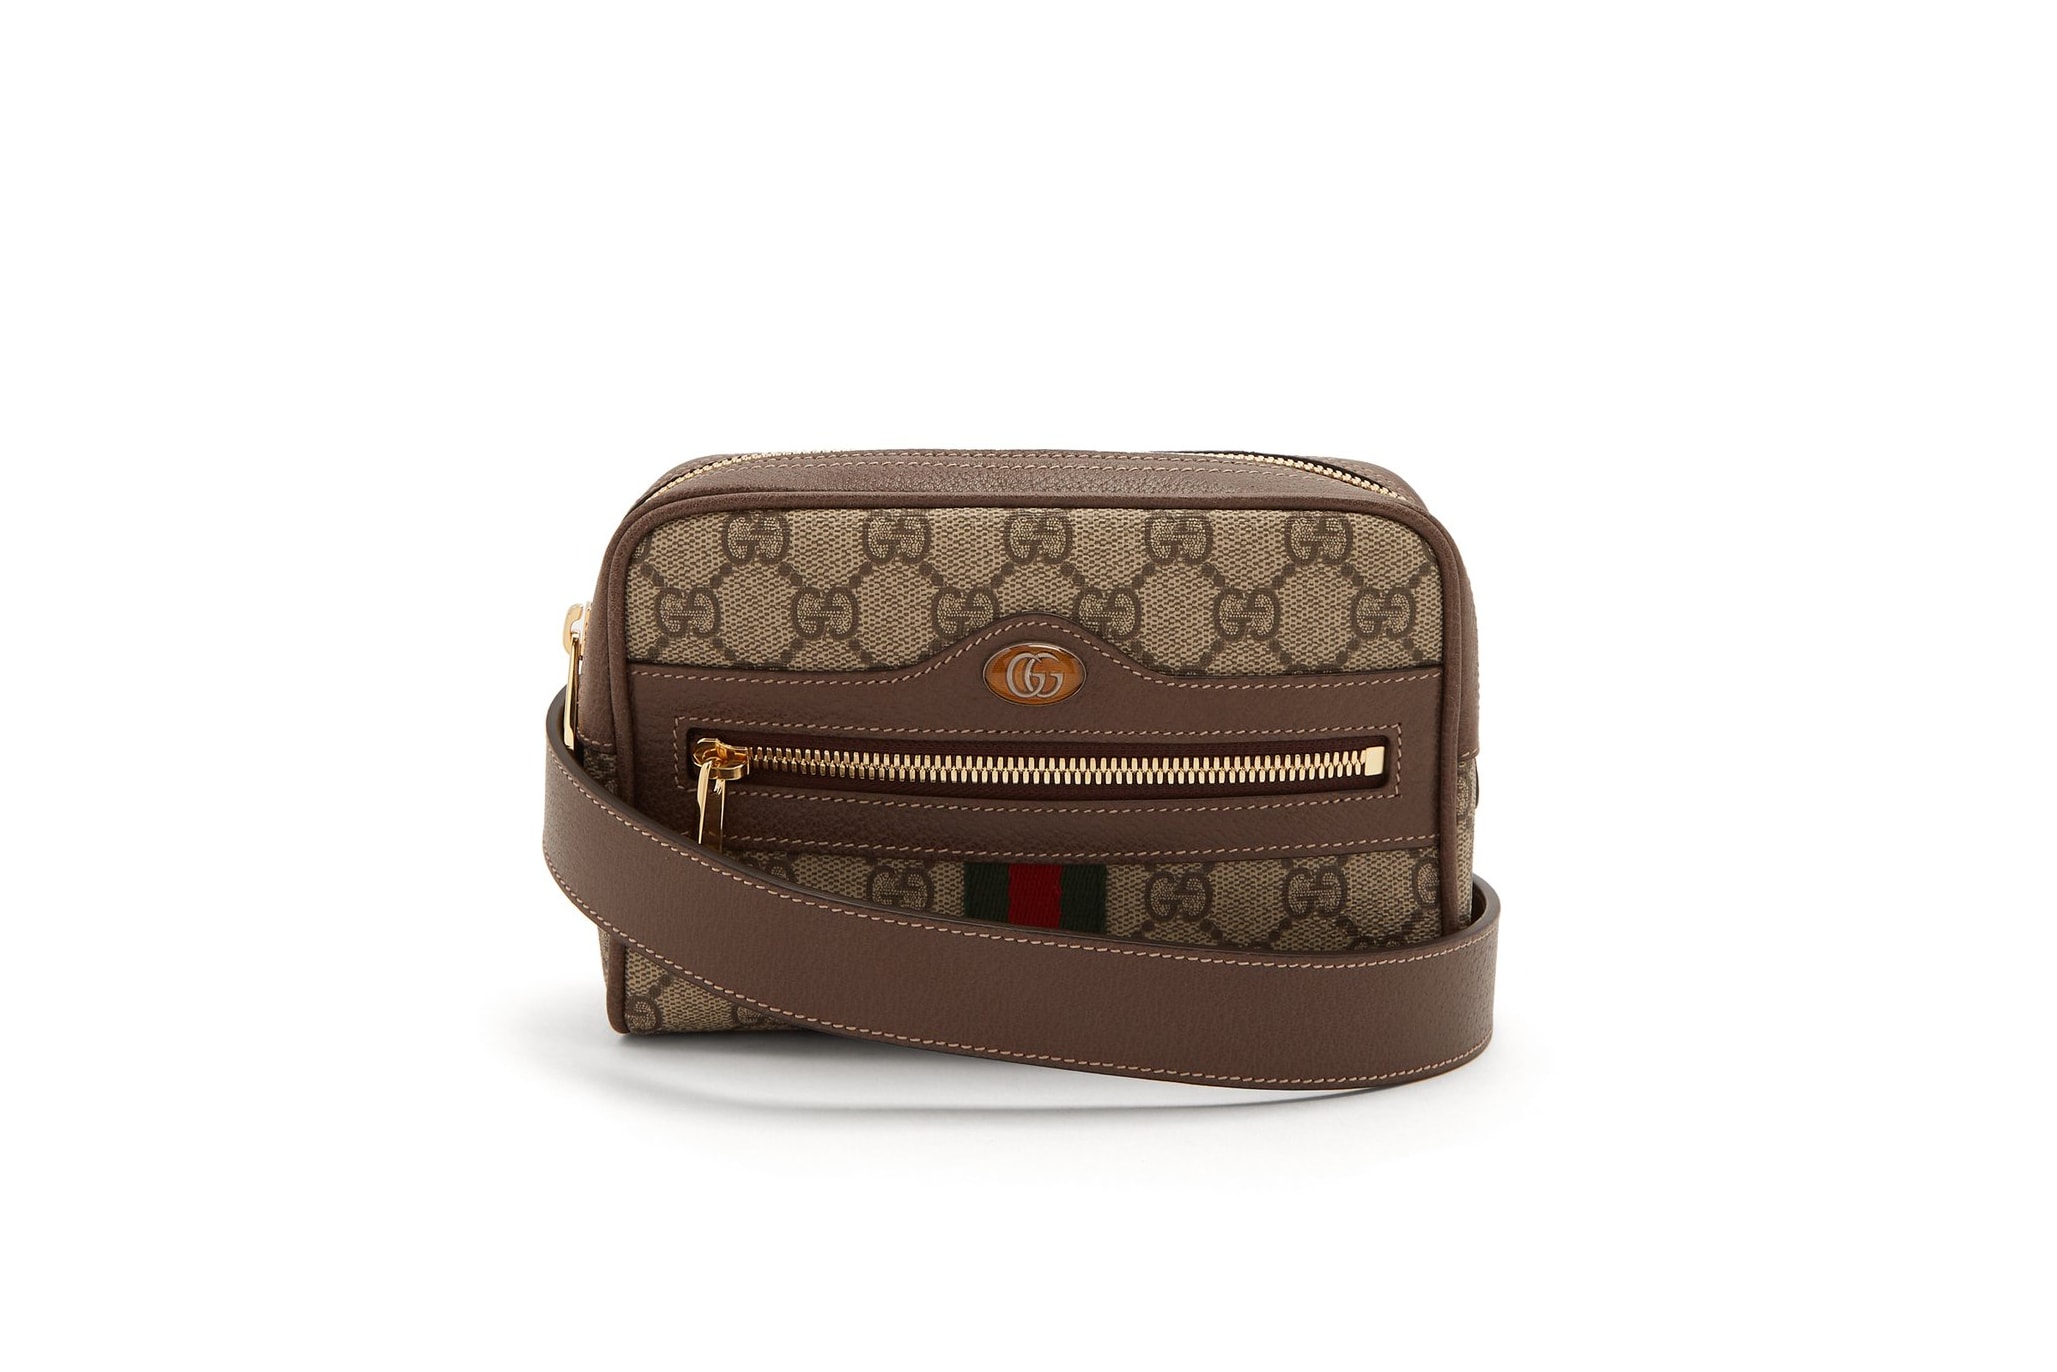 Gucci Vintage Monogram Ophidia Belt-Bag Retro Pattern Print Fanny Pack Alessandro Michele Purse Designer Bag